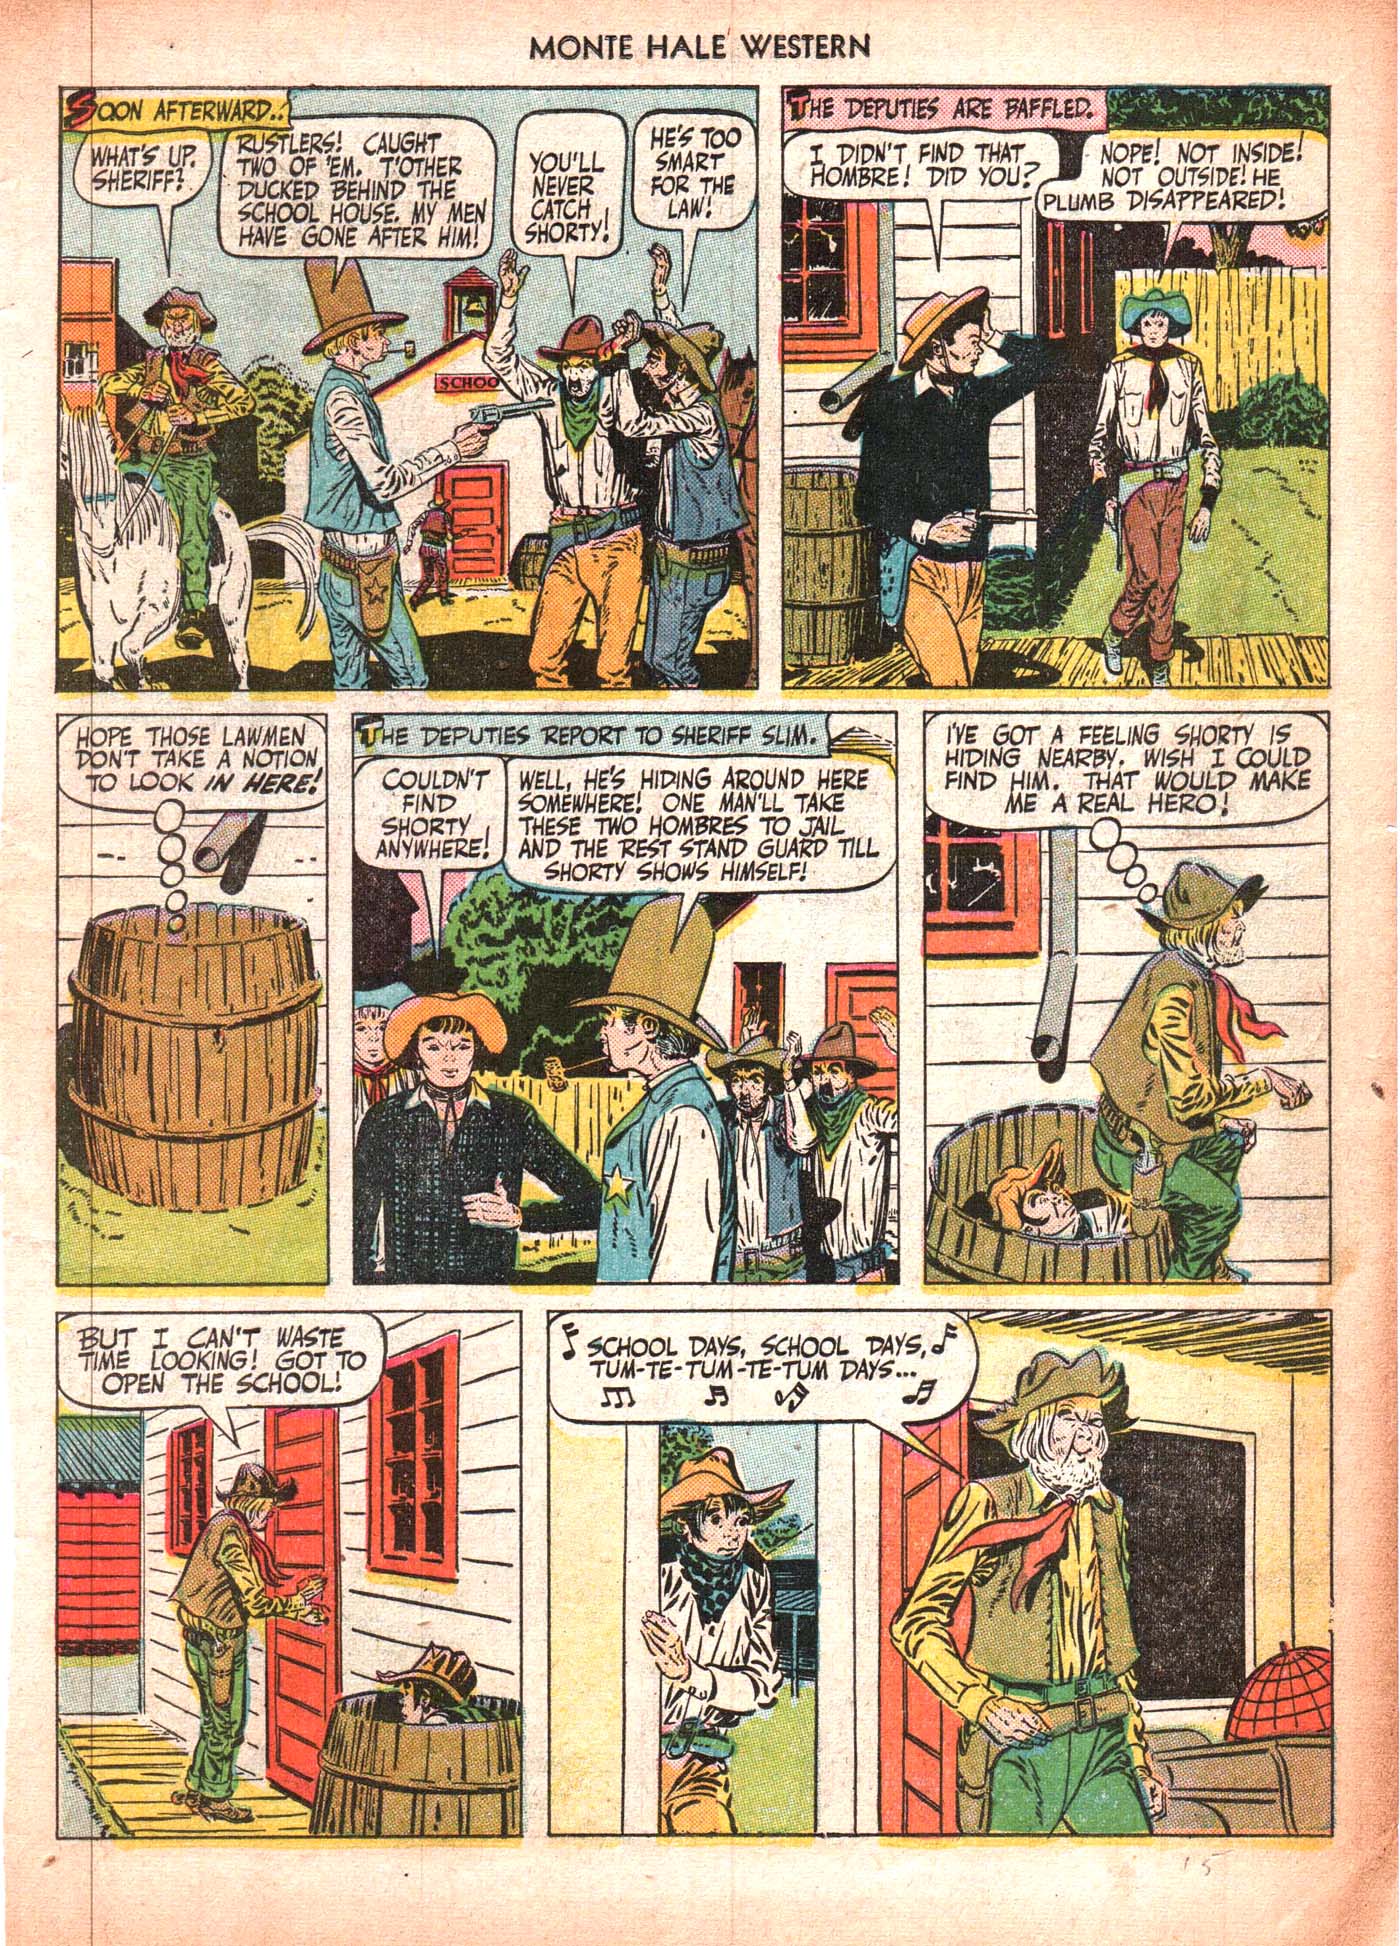 Read online Monte Hale Western comic -  Issue #50 - 15